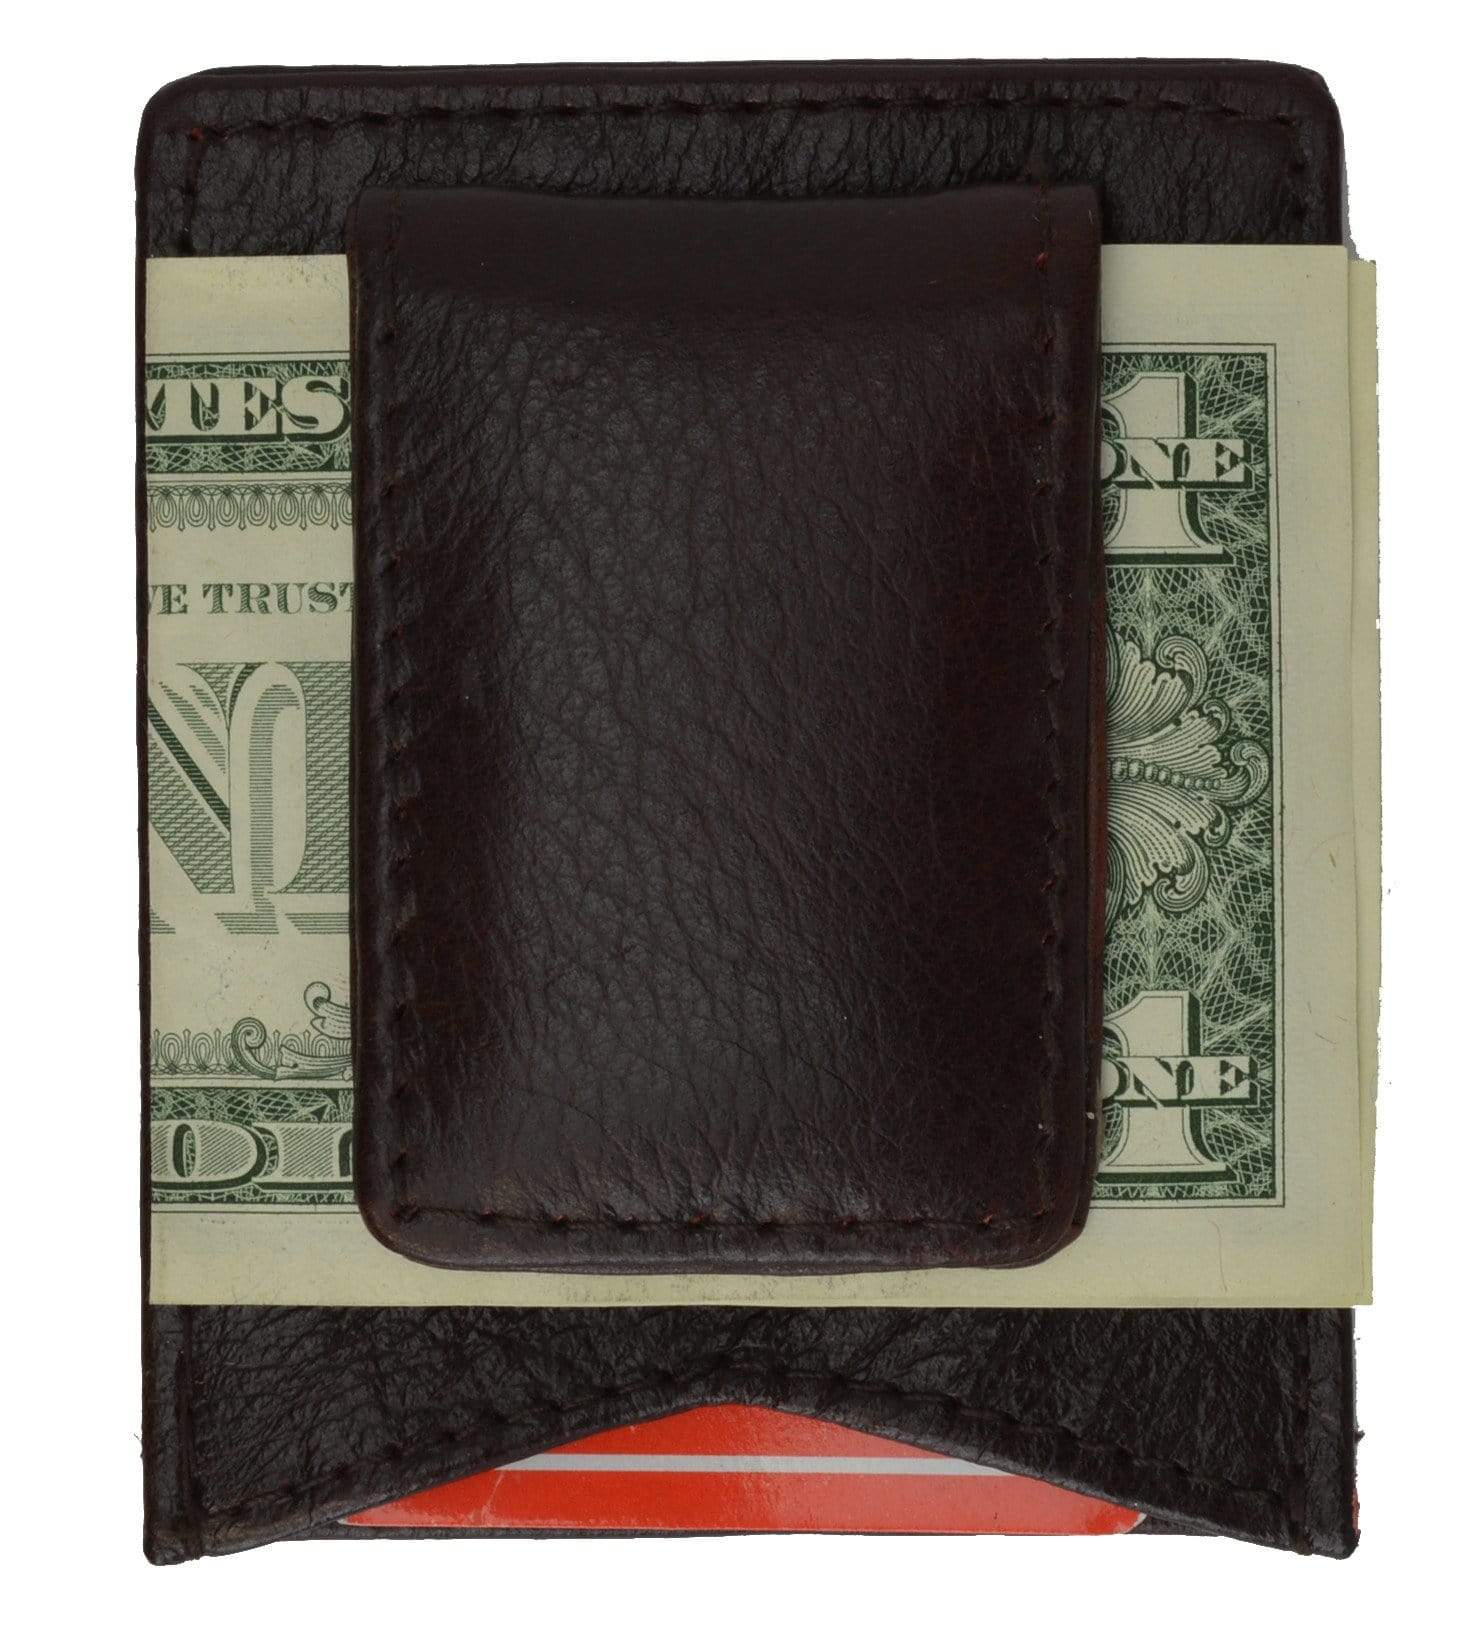 Beautiful Black Leather Money Clip Wallet